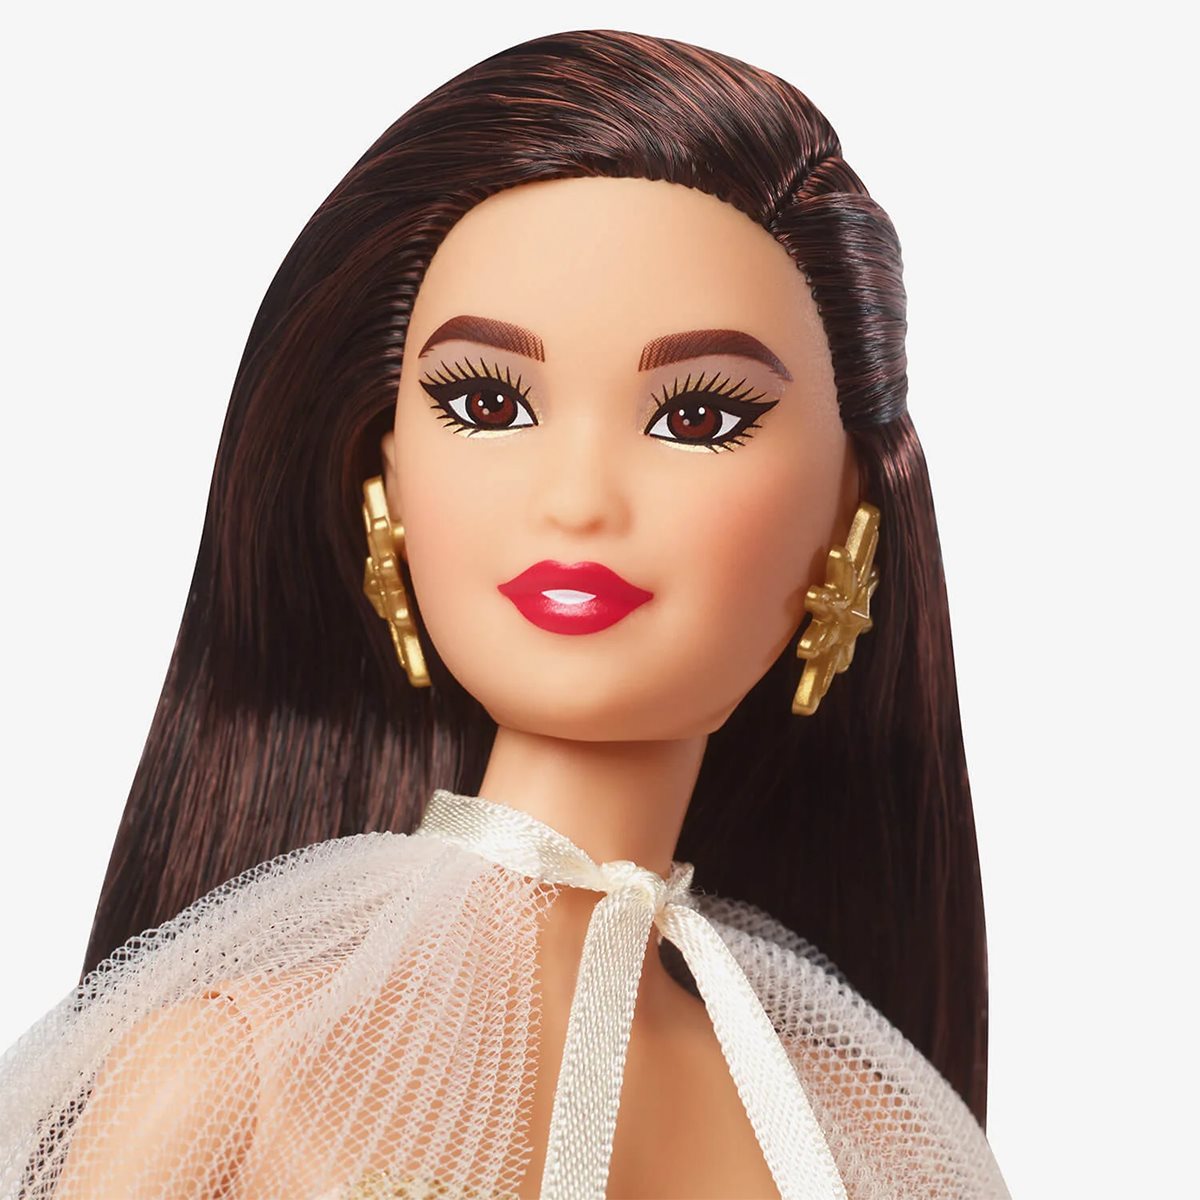 Barbie Doll Black